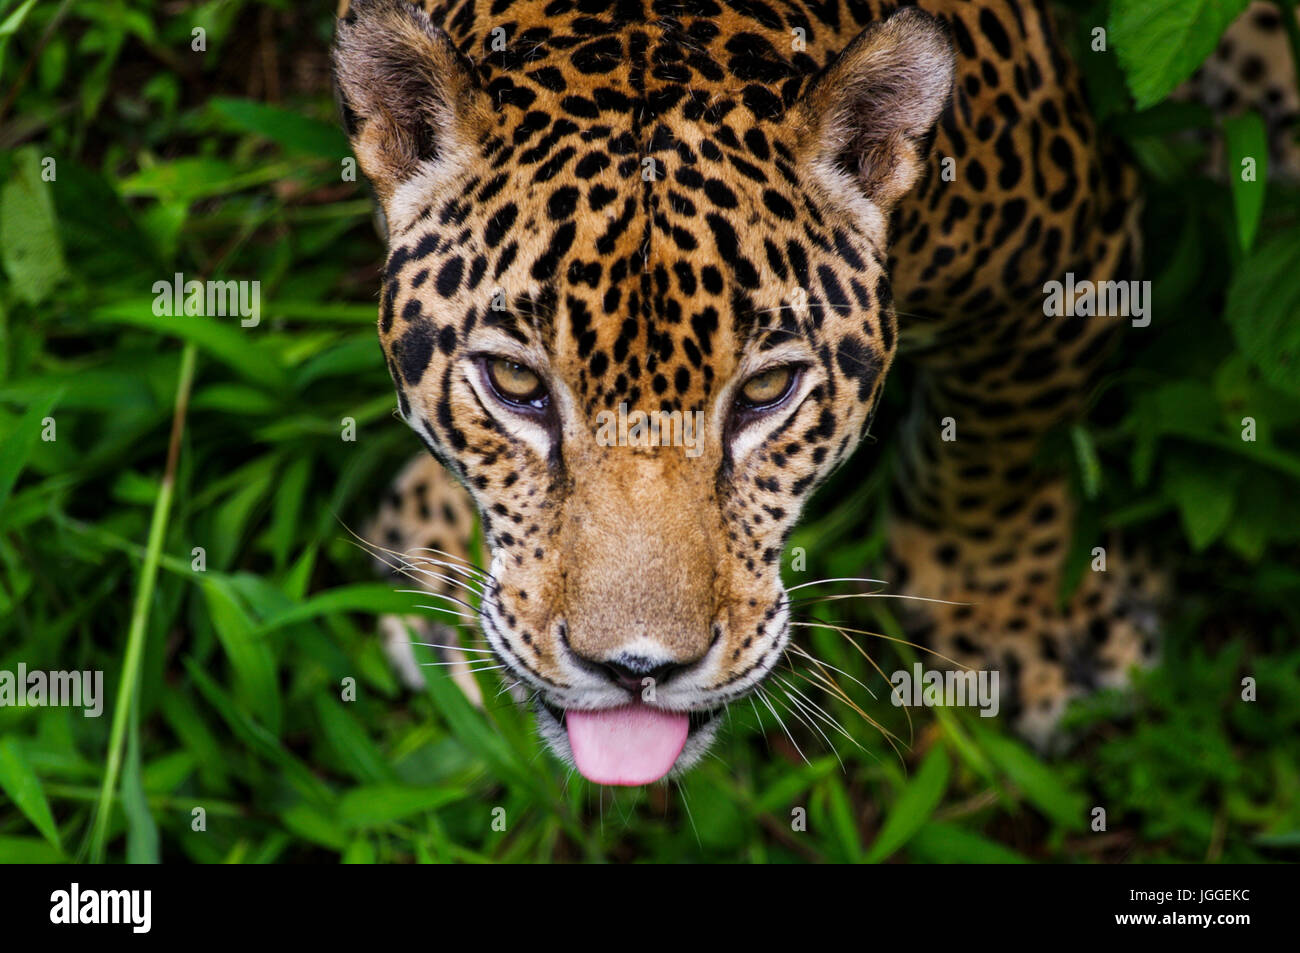 Grande gatto selvatico jaguar Panthera onca wildlife immagine presa in Panama Foto Stock